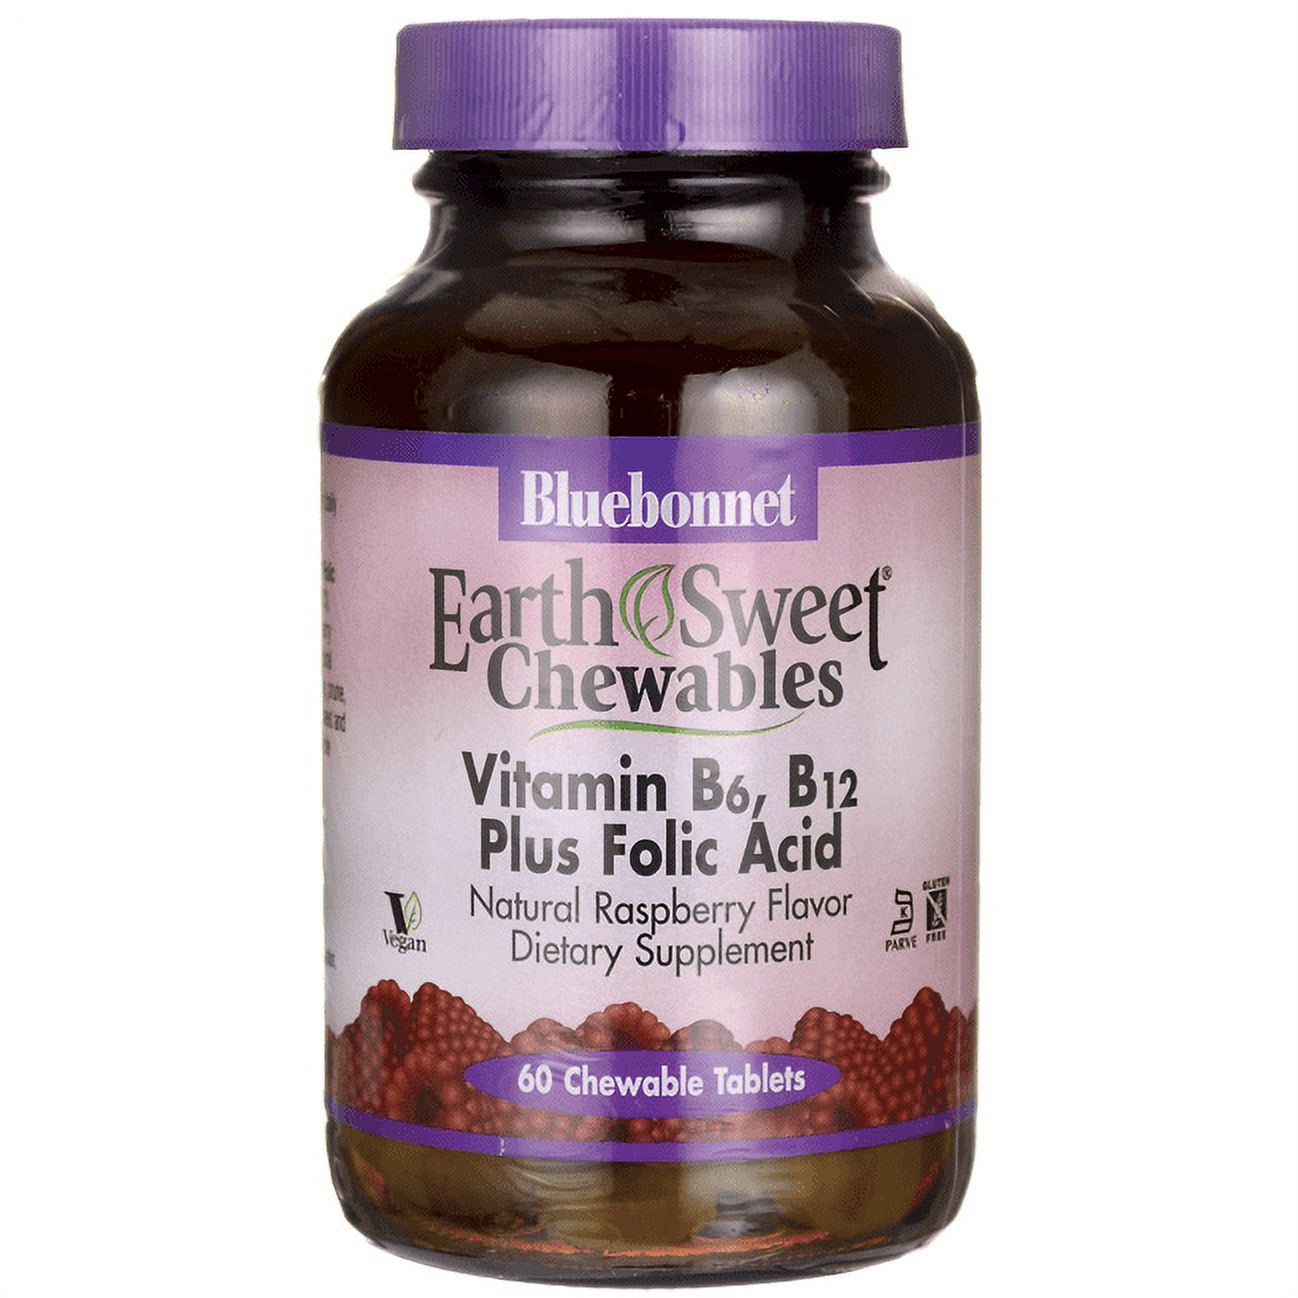 Bluebonnet Nutrition Earthsweet Vitamin B6, B12, plus Folic Acid Chewables, Natural Raspberry, 60 Ct - image 1 of 2